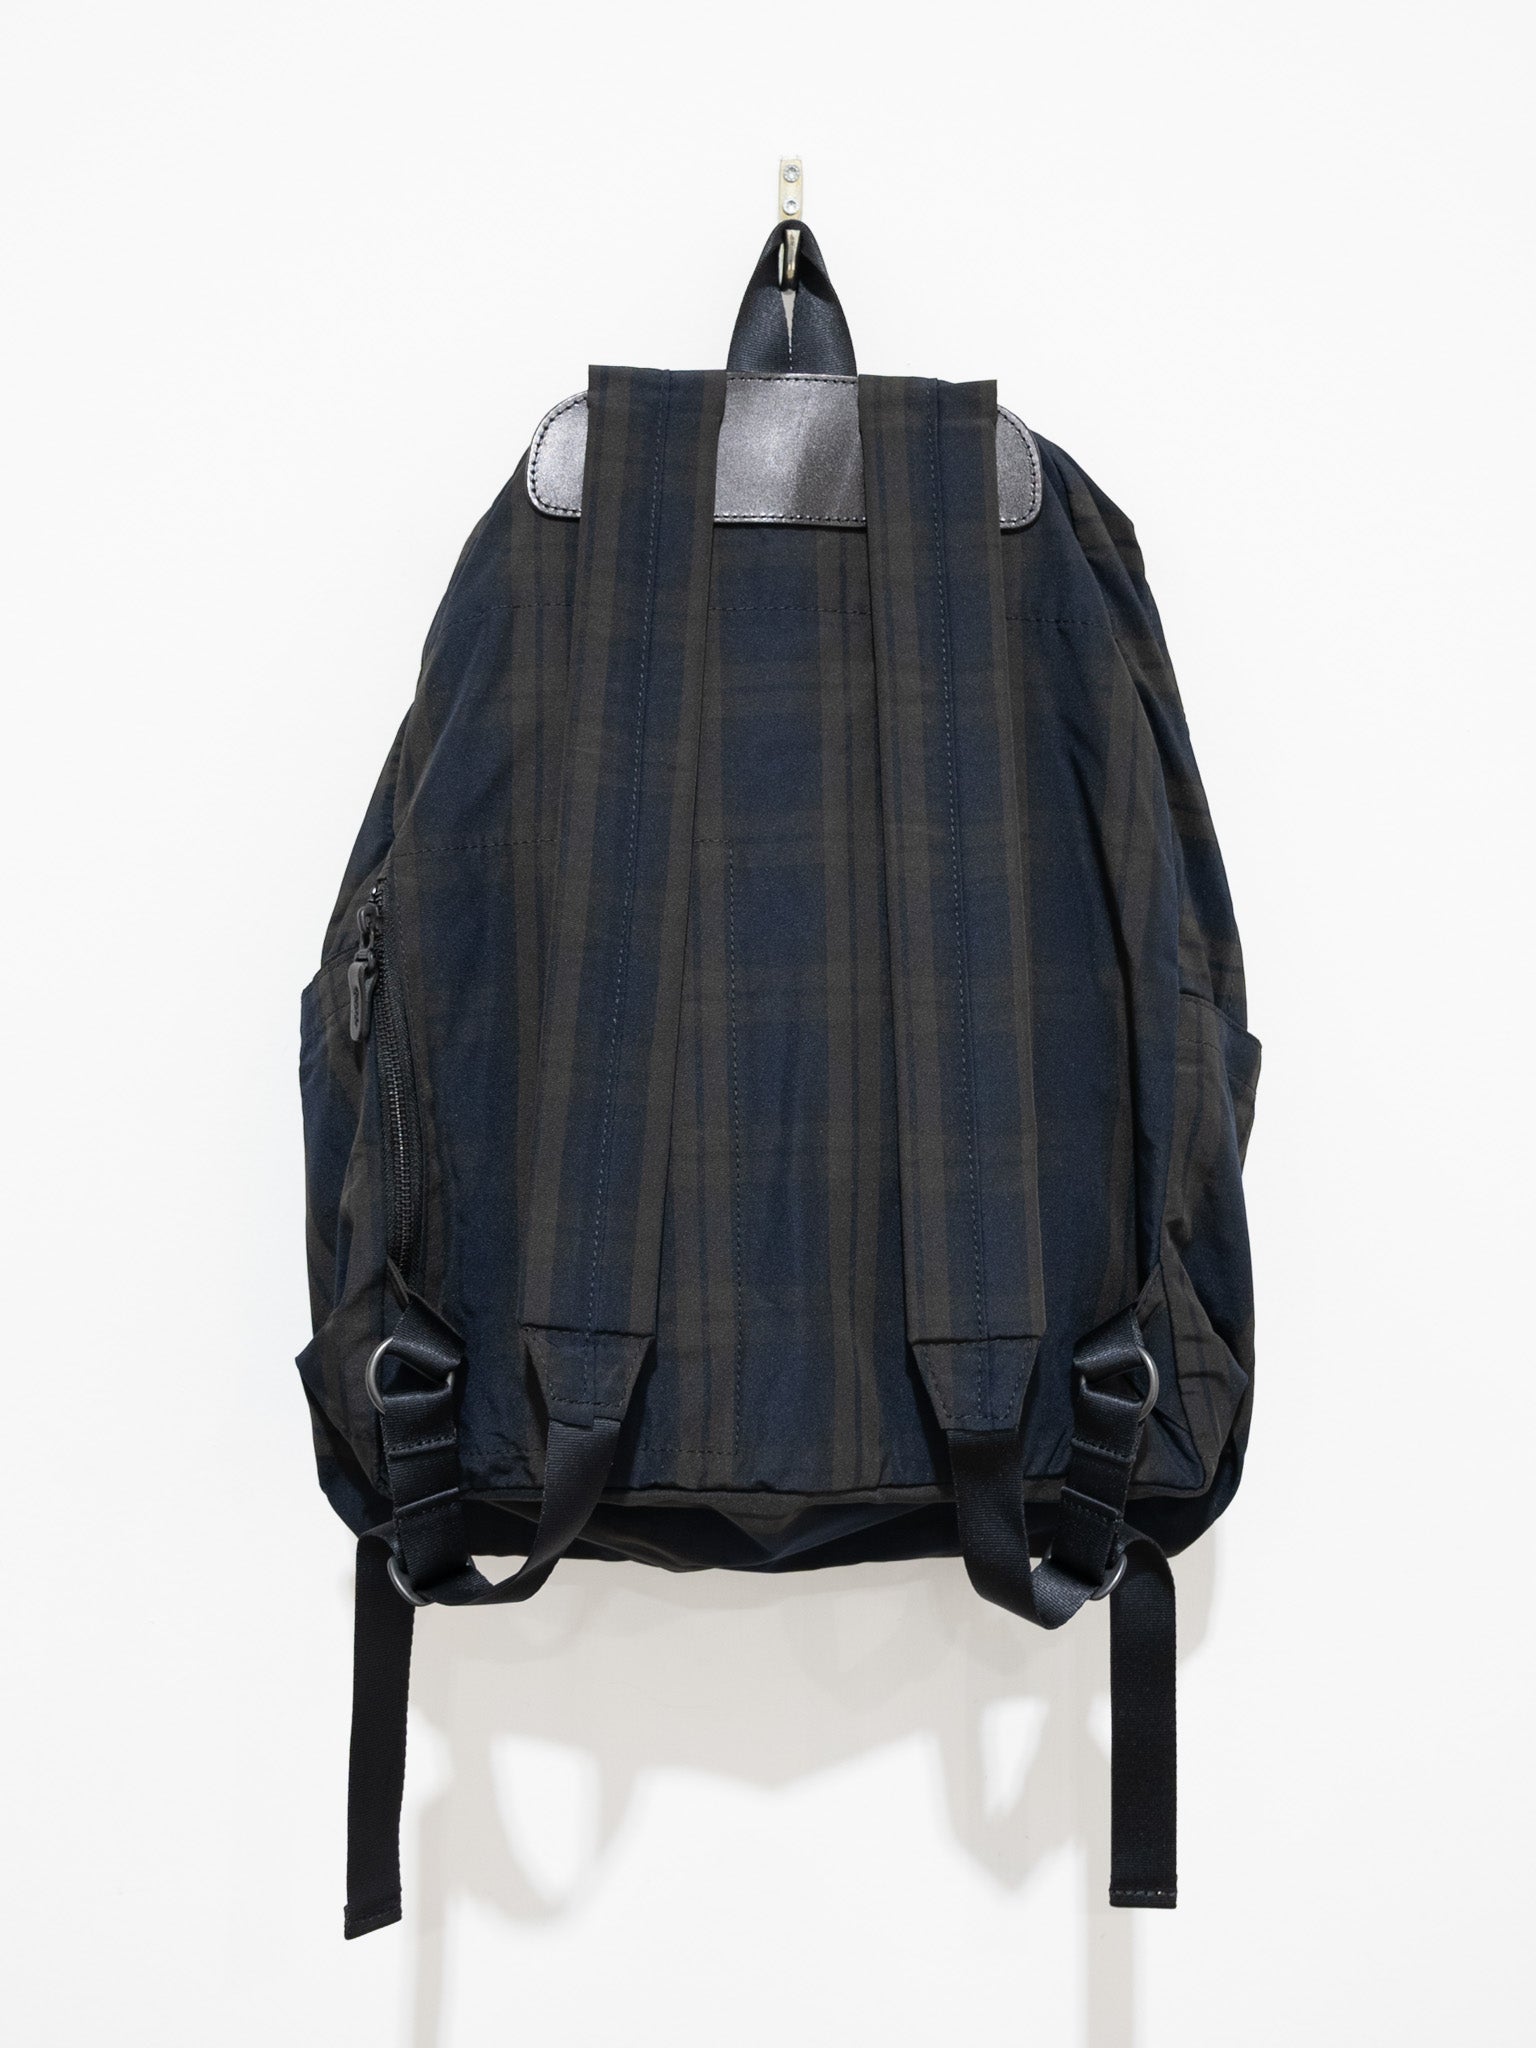 Small Backpack, Personalized, Blue Denim Space Panda - Nik's Naks